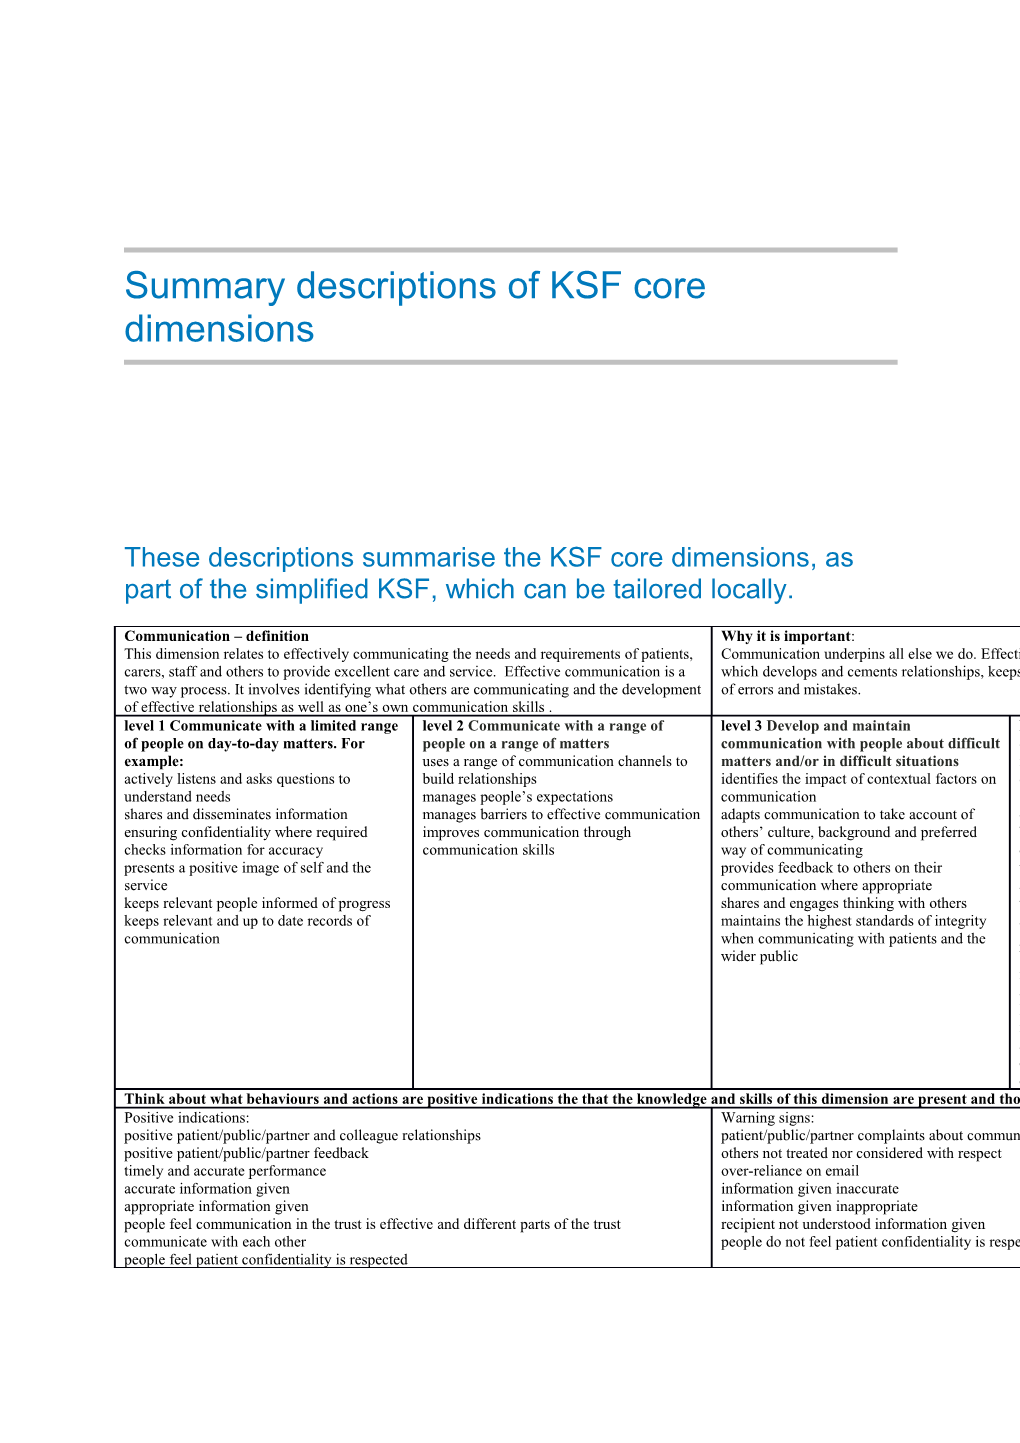 KSF - Summary KSF Core Dimensions